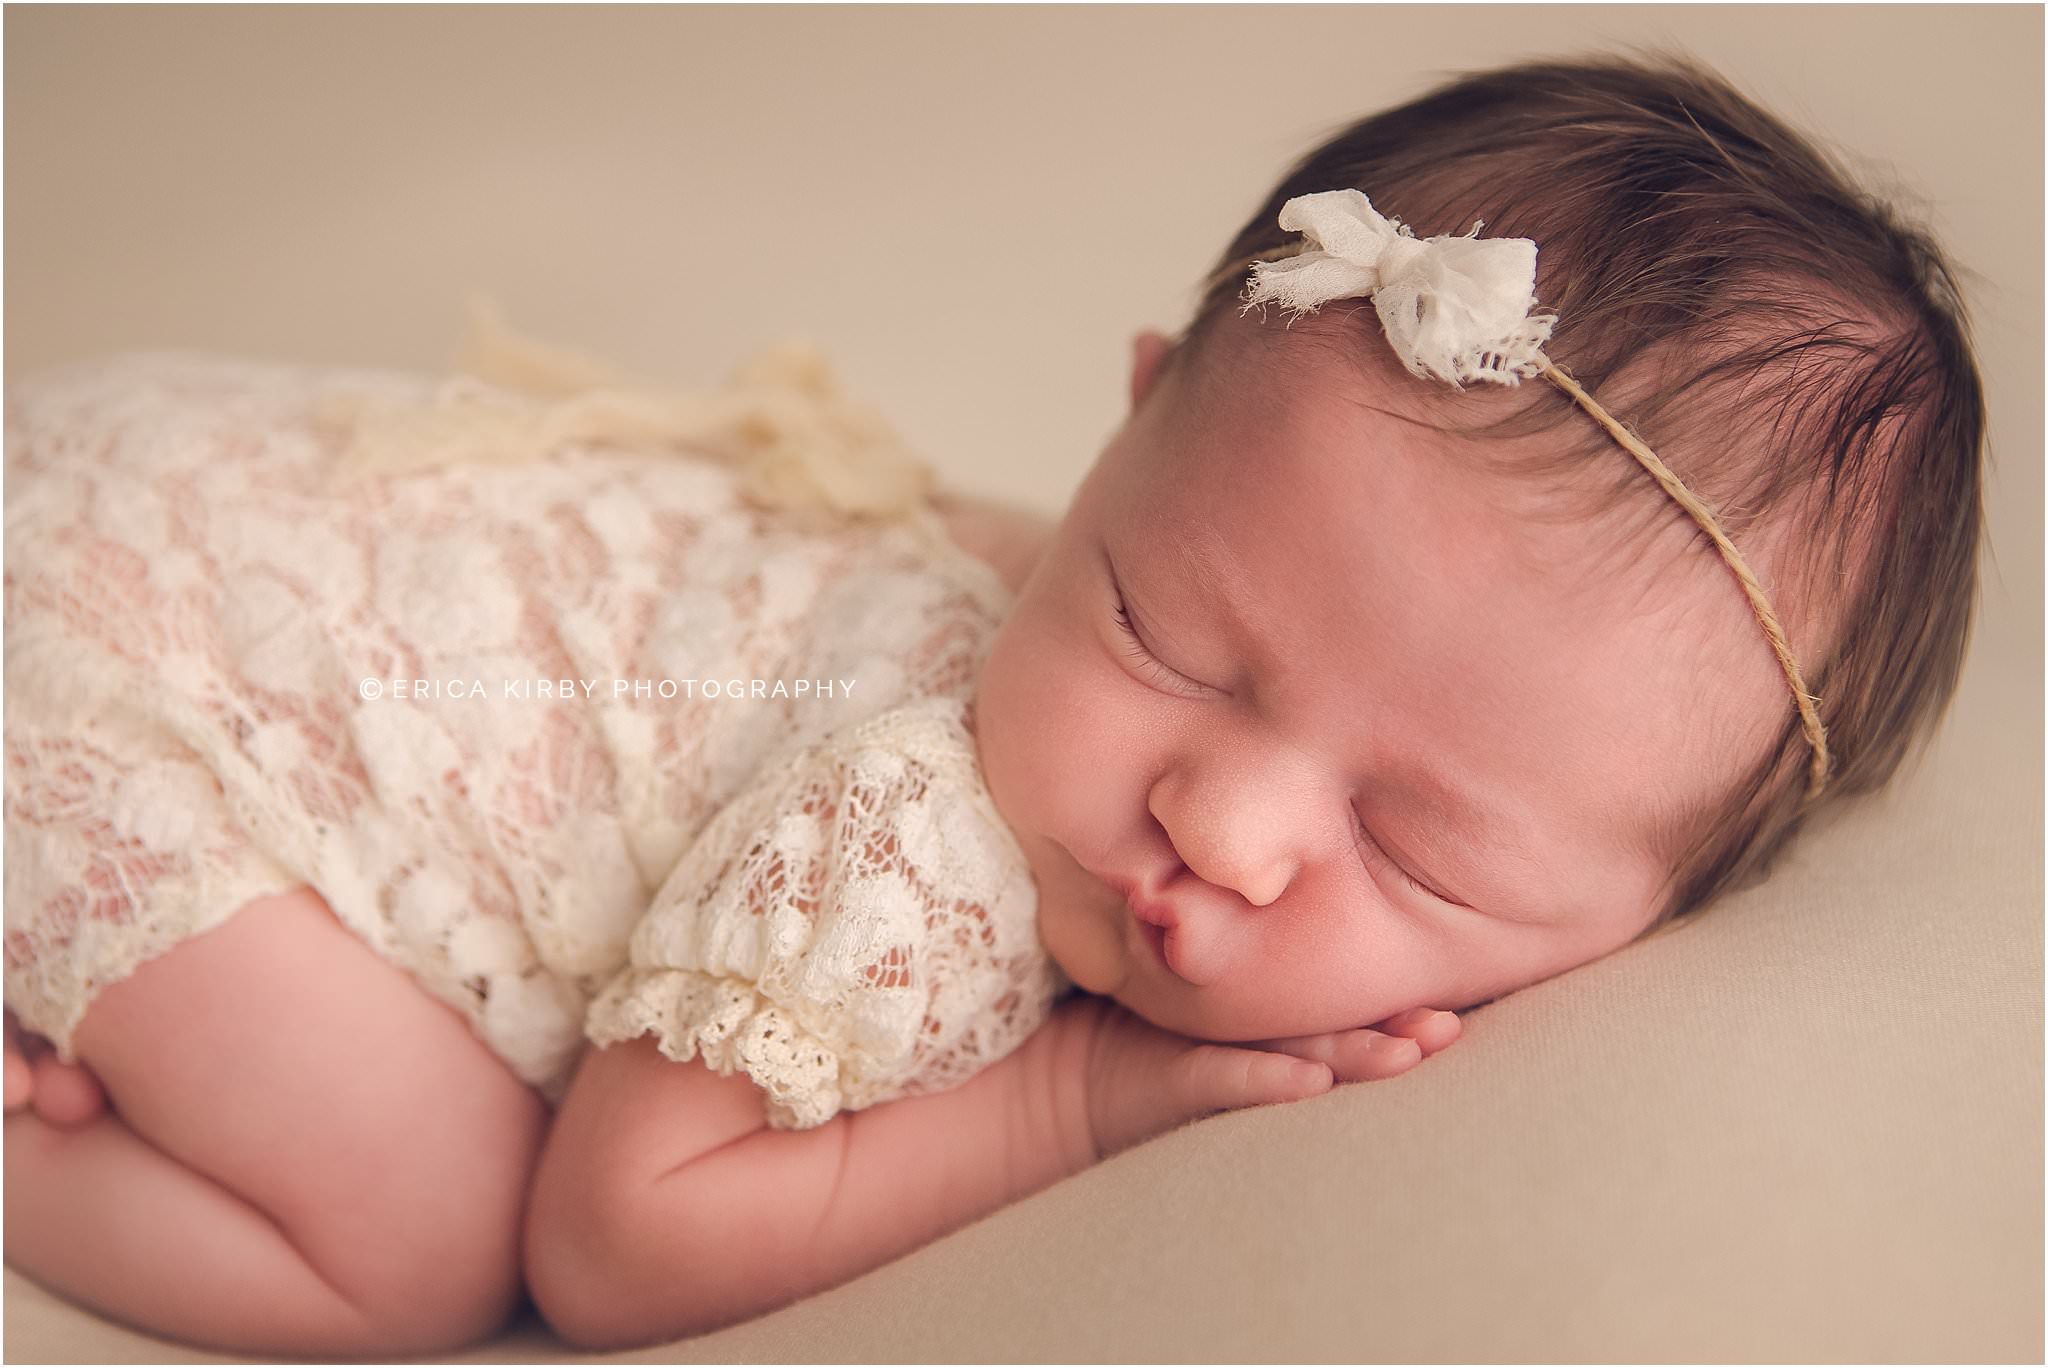 NWA Newborn Photographers | Newborn baby girl photo session in Erica Kirby Photography Bentonville studio | Rogers Fayetteville Arkansas